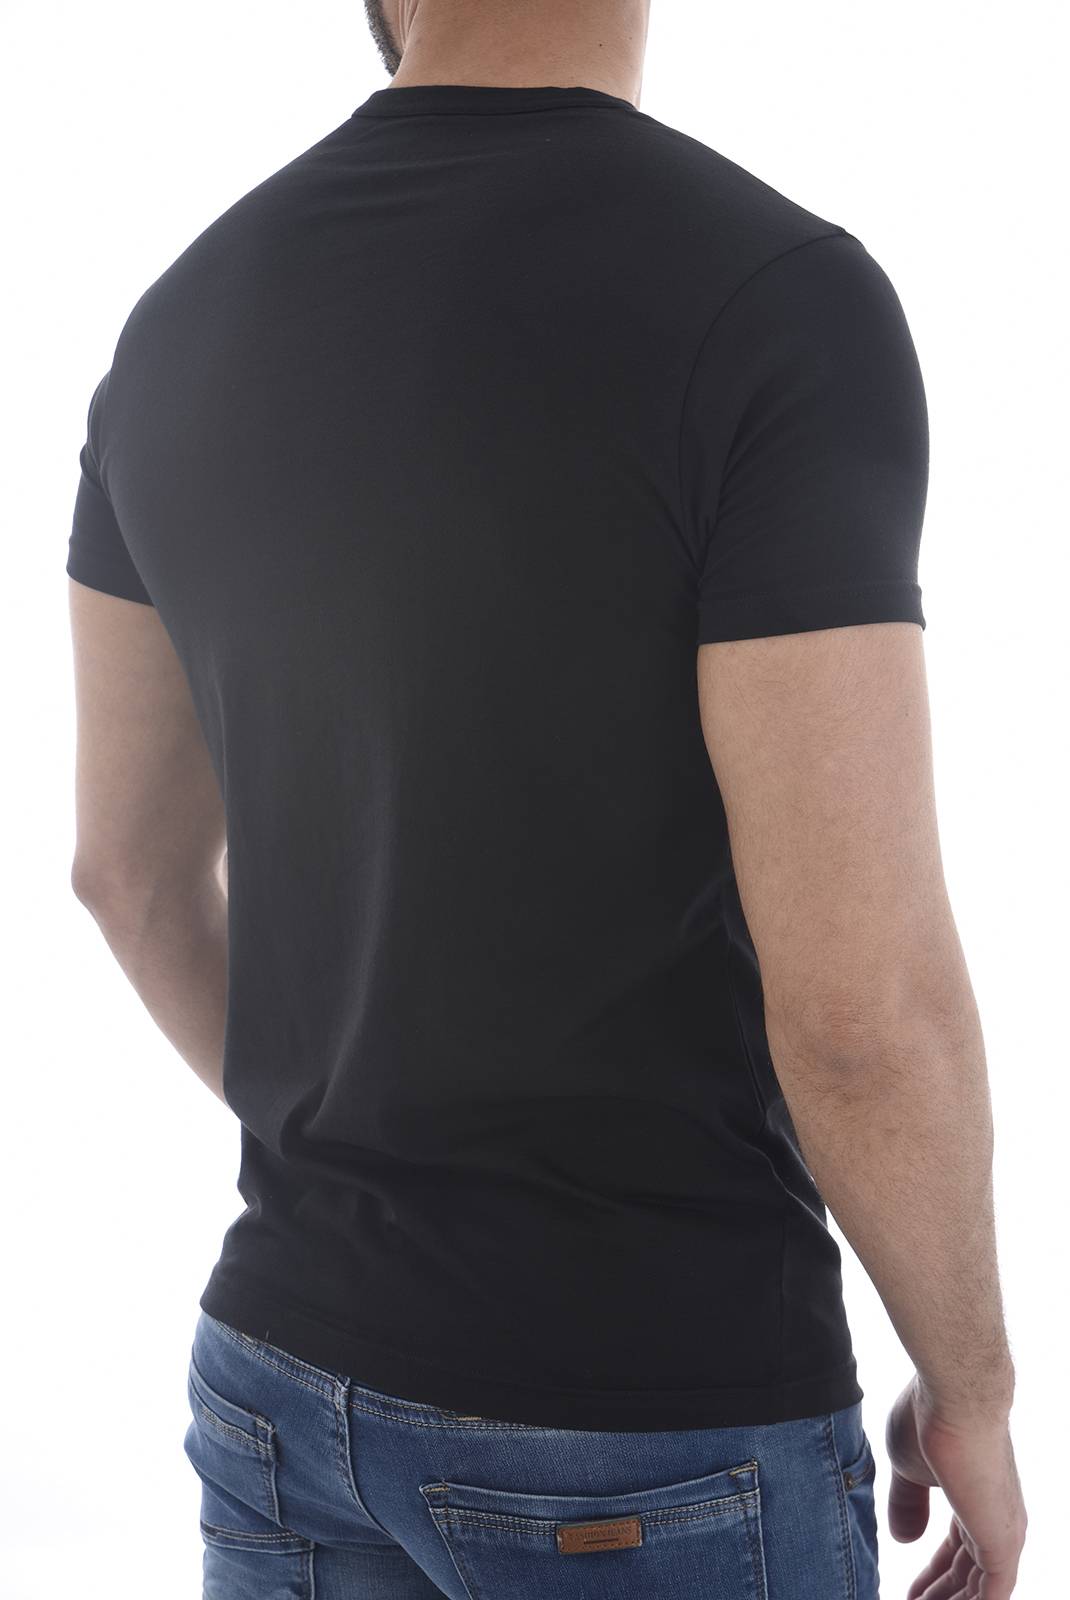 Emporio Armani Tee-shirt Noir À Manches Courtes 111267 Cc715 